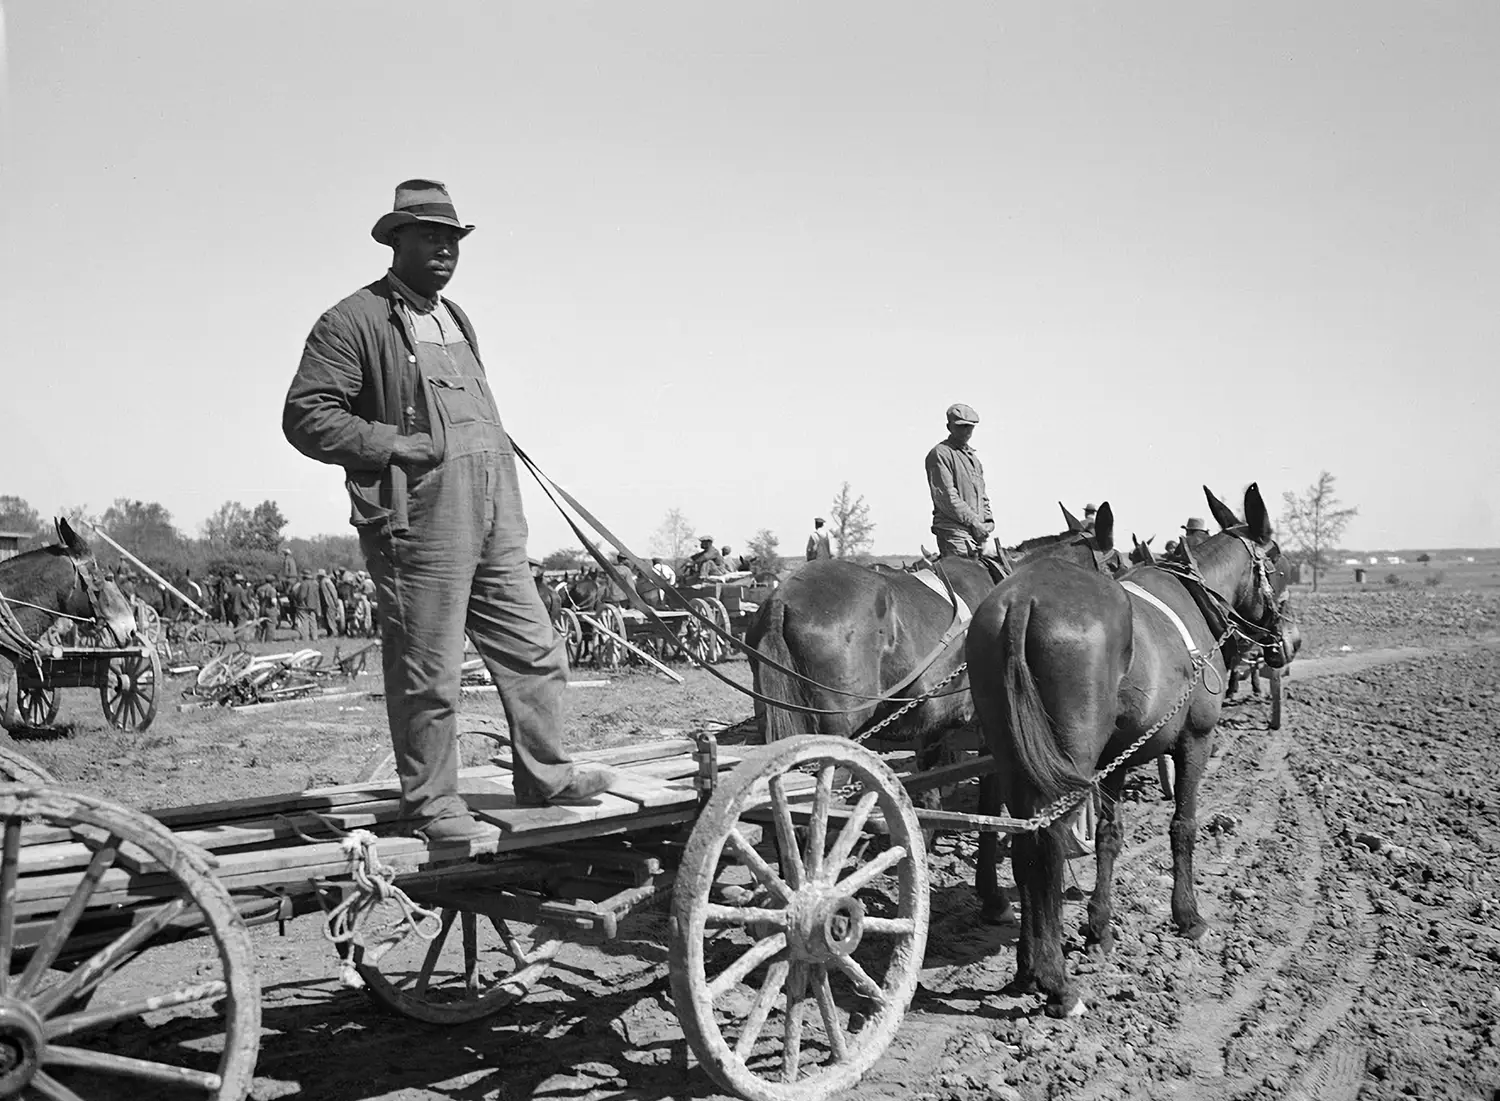 A black farmer standing on a horse-drawn wagon.